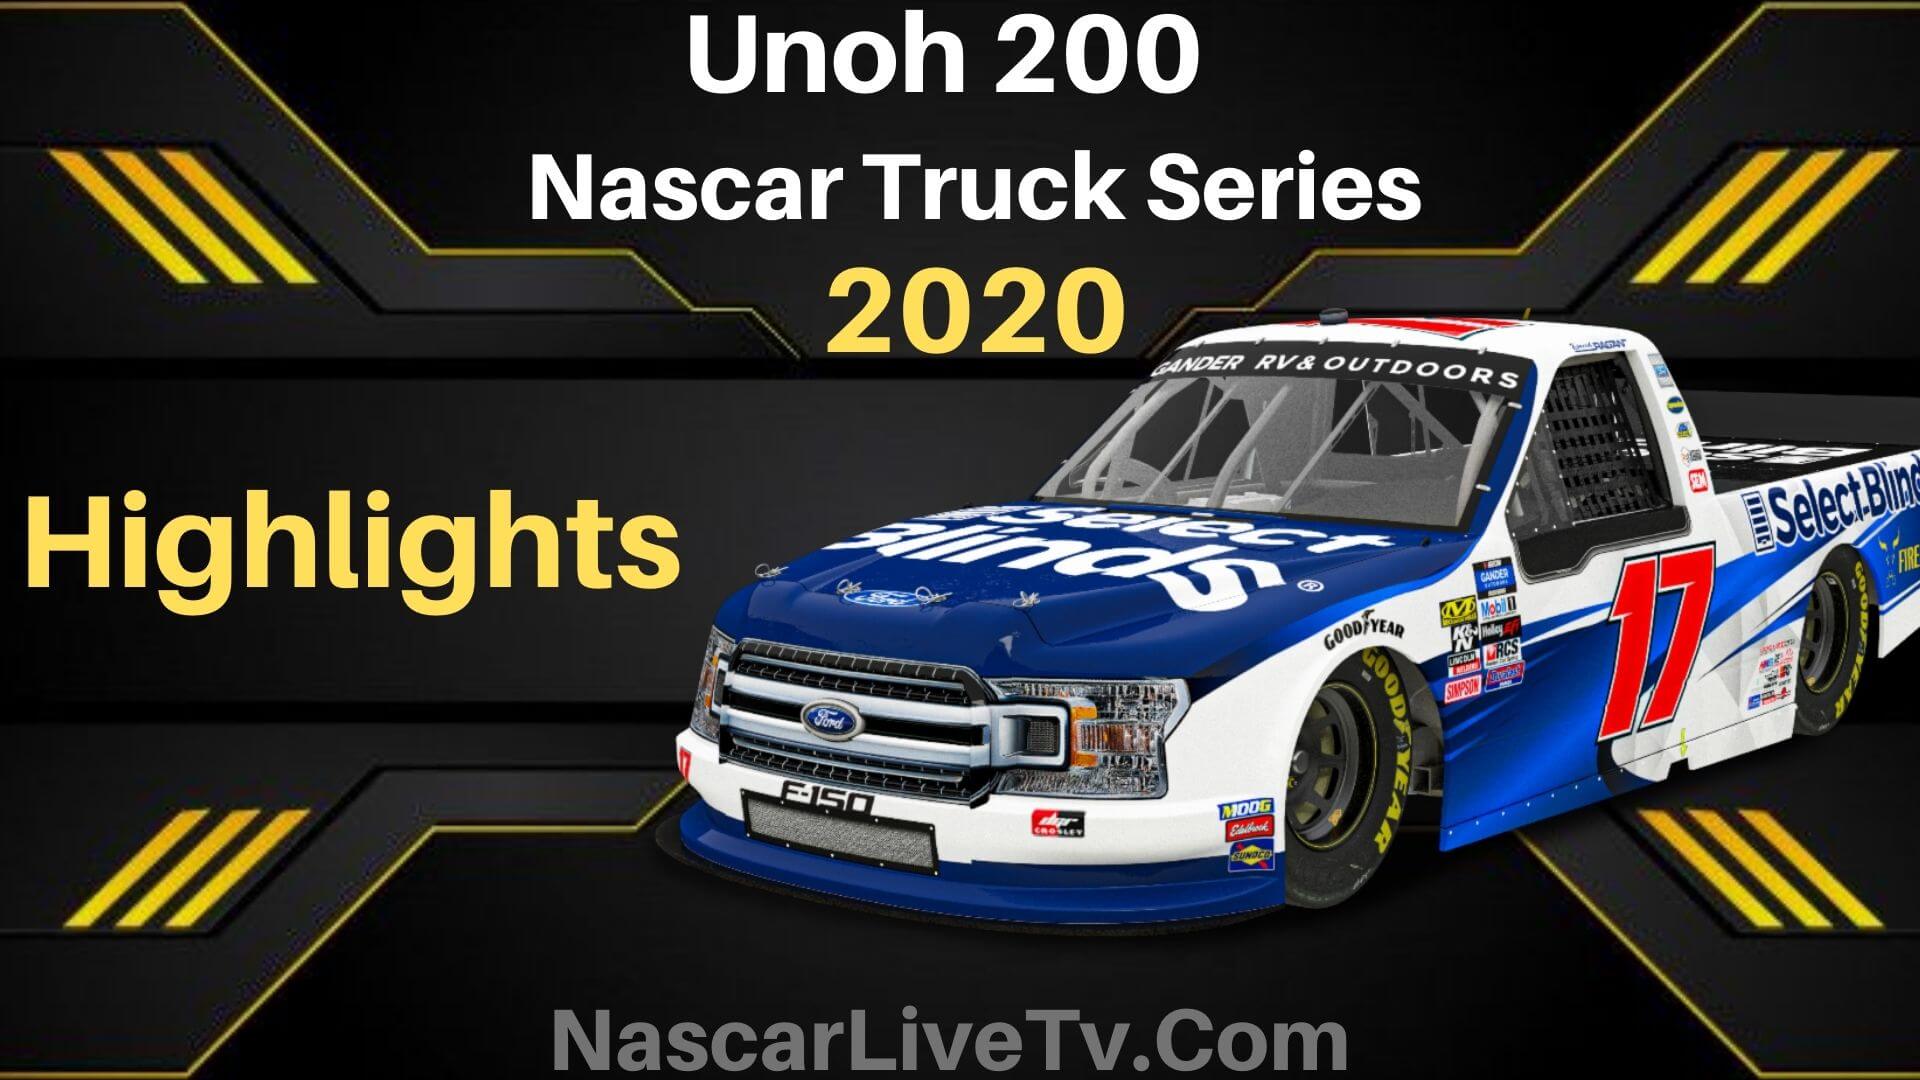 Unoh 200 Nascar Truck Series 2020 Highlights